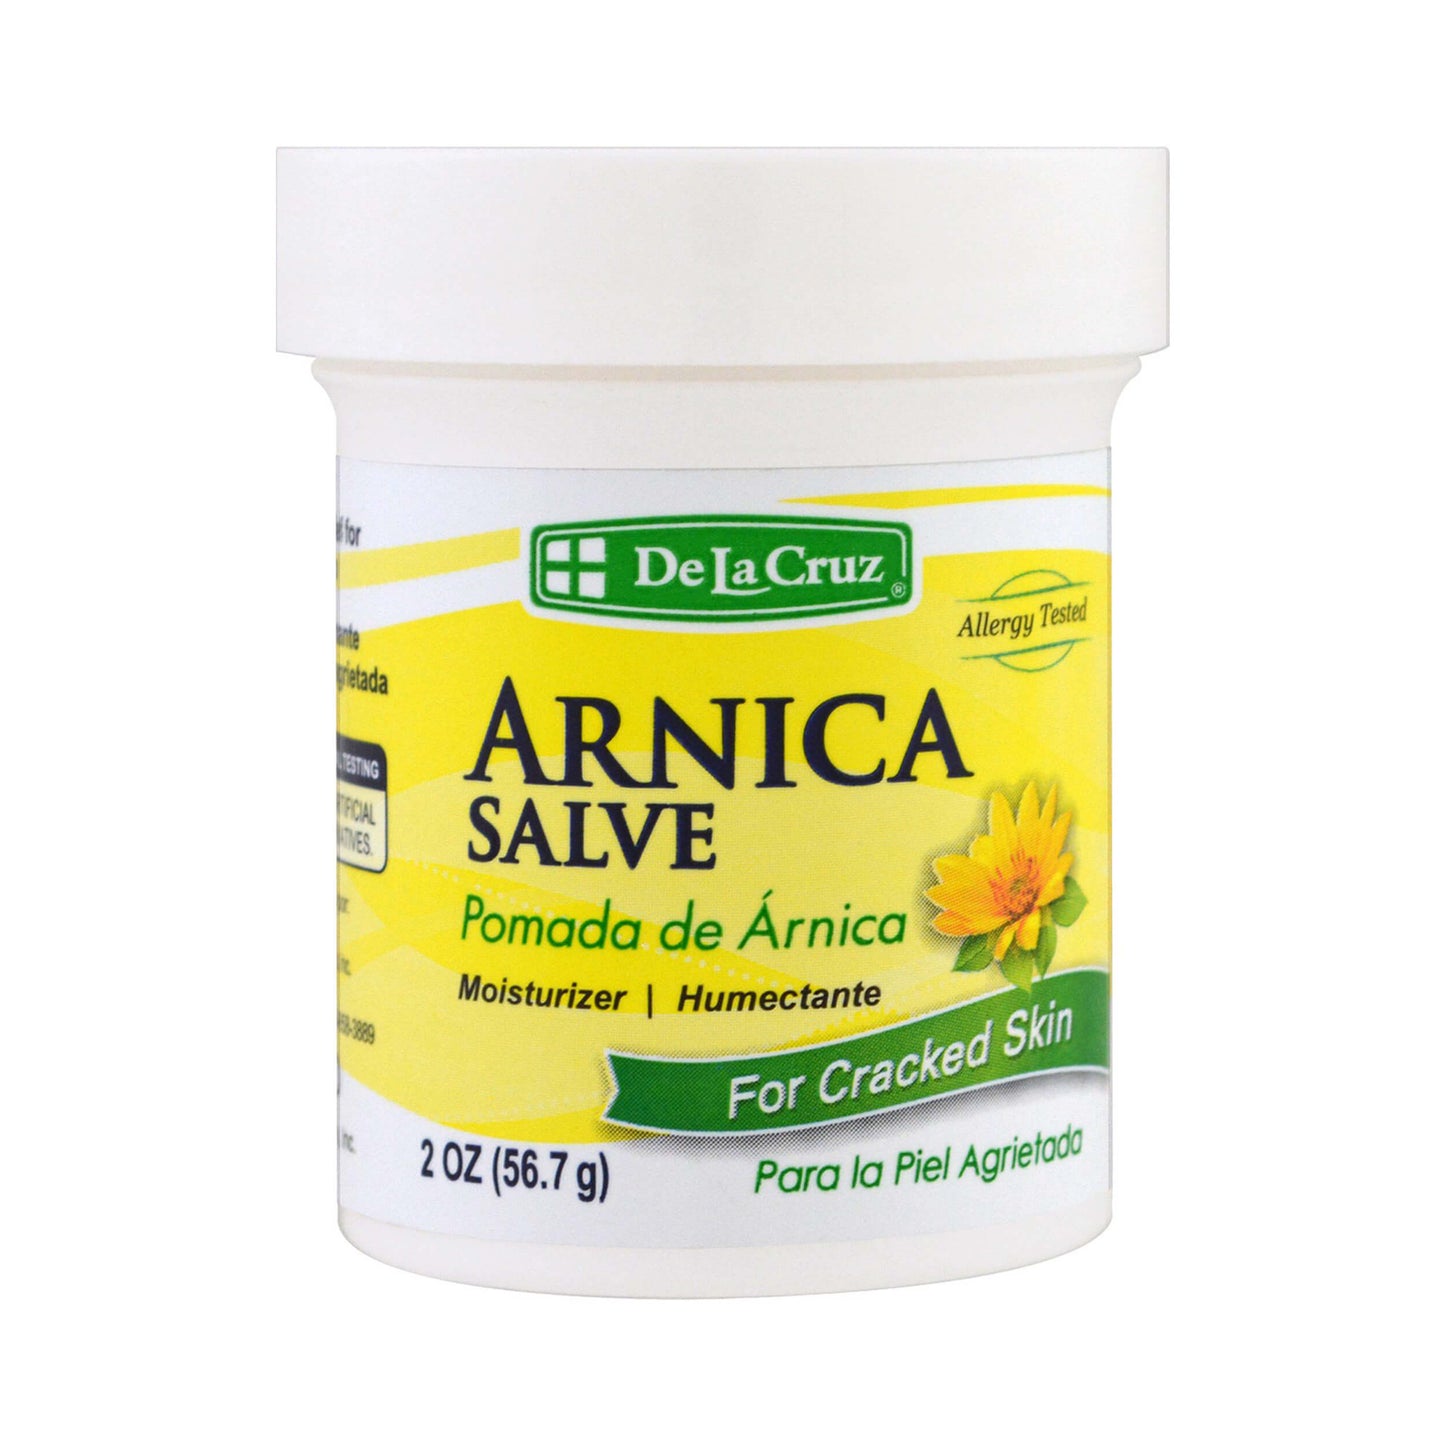 De La Cruz Arnica Salve for Cracked Skin 56.7g